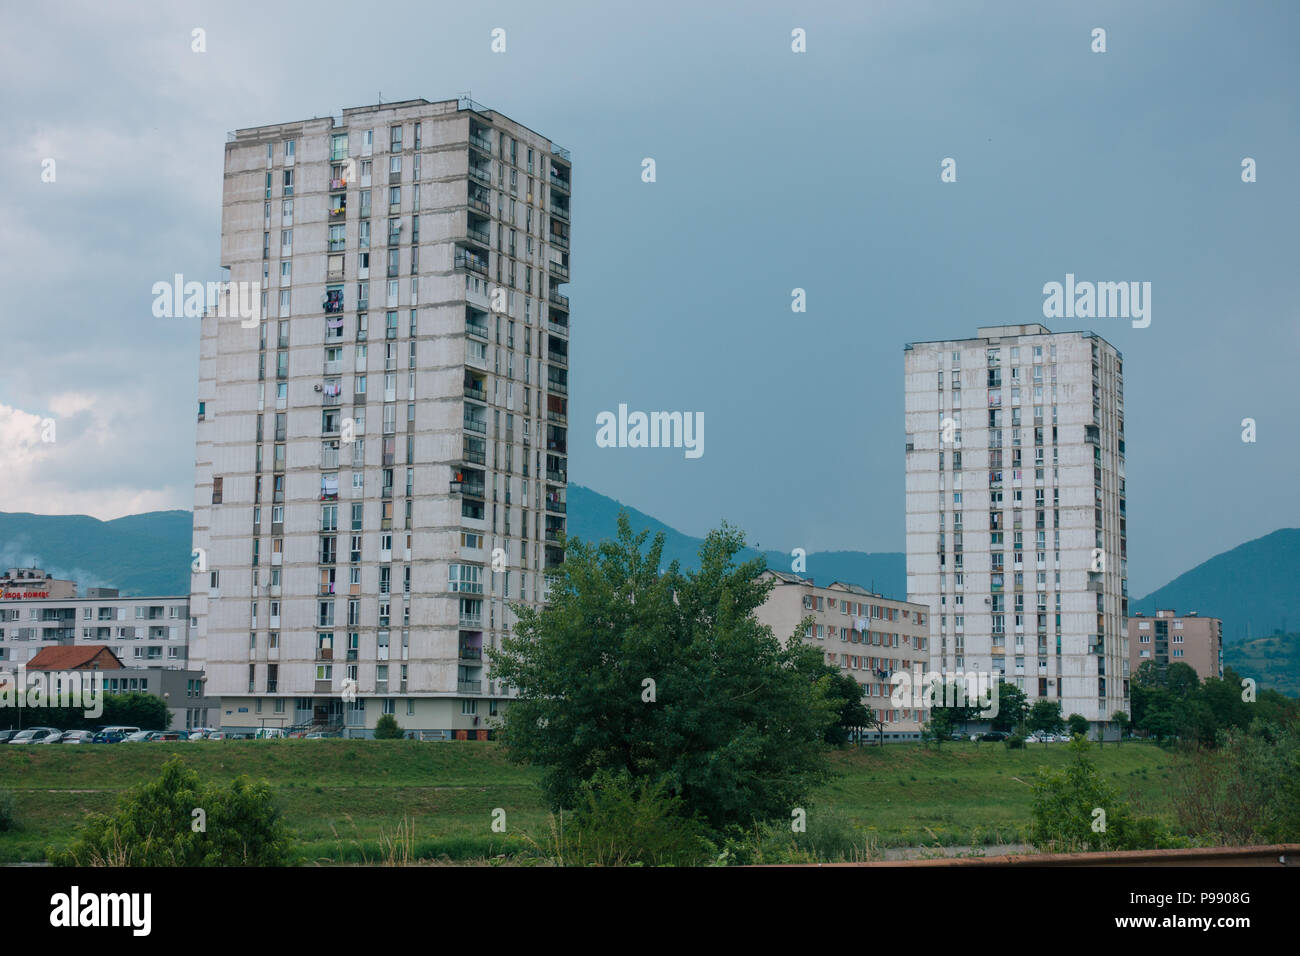 Plain rectangular apartment blocks in the city of Zenica, Bosnia and Herzegovina Stock Photo